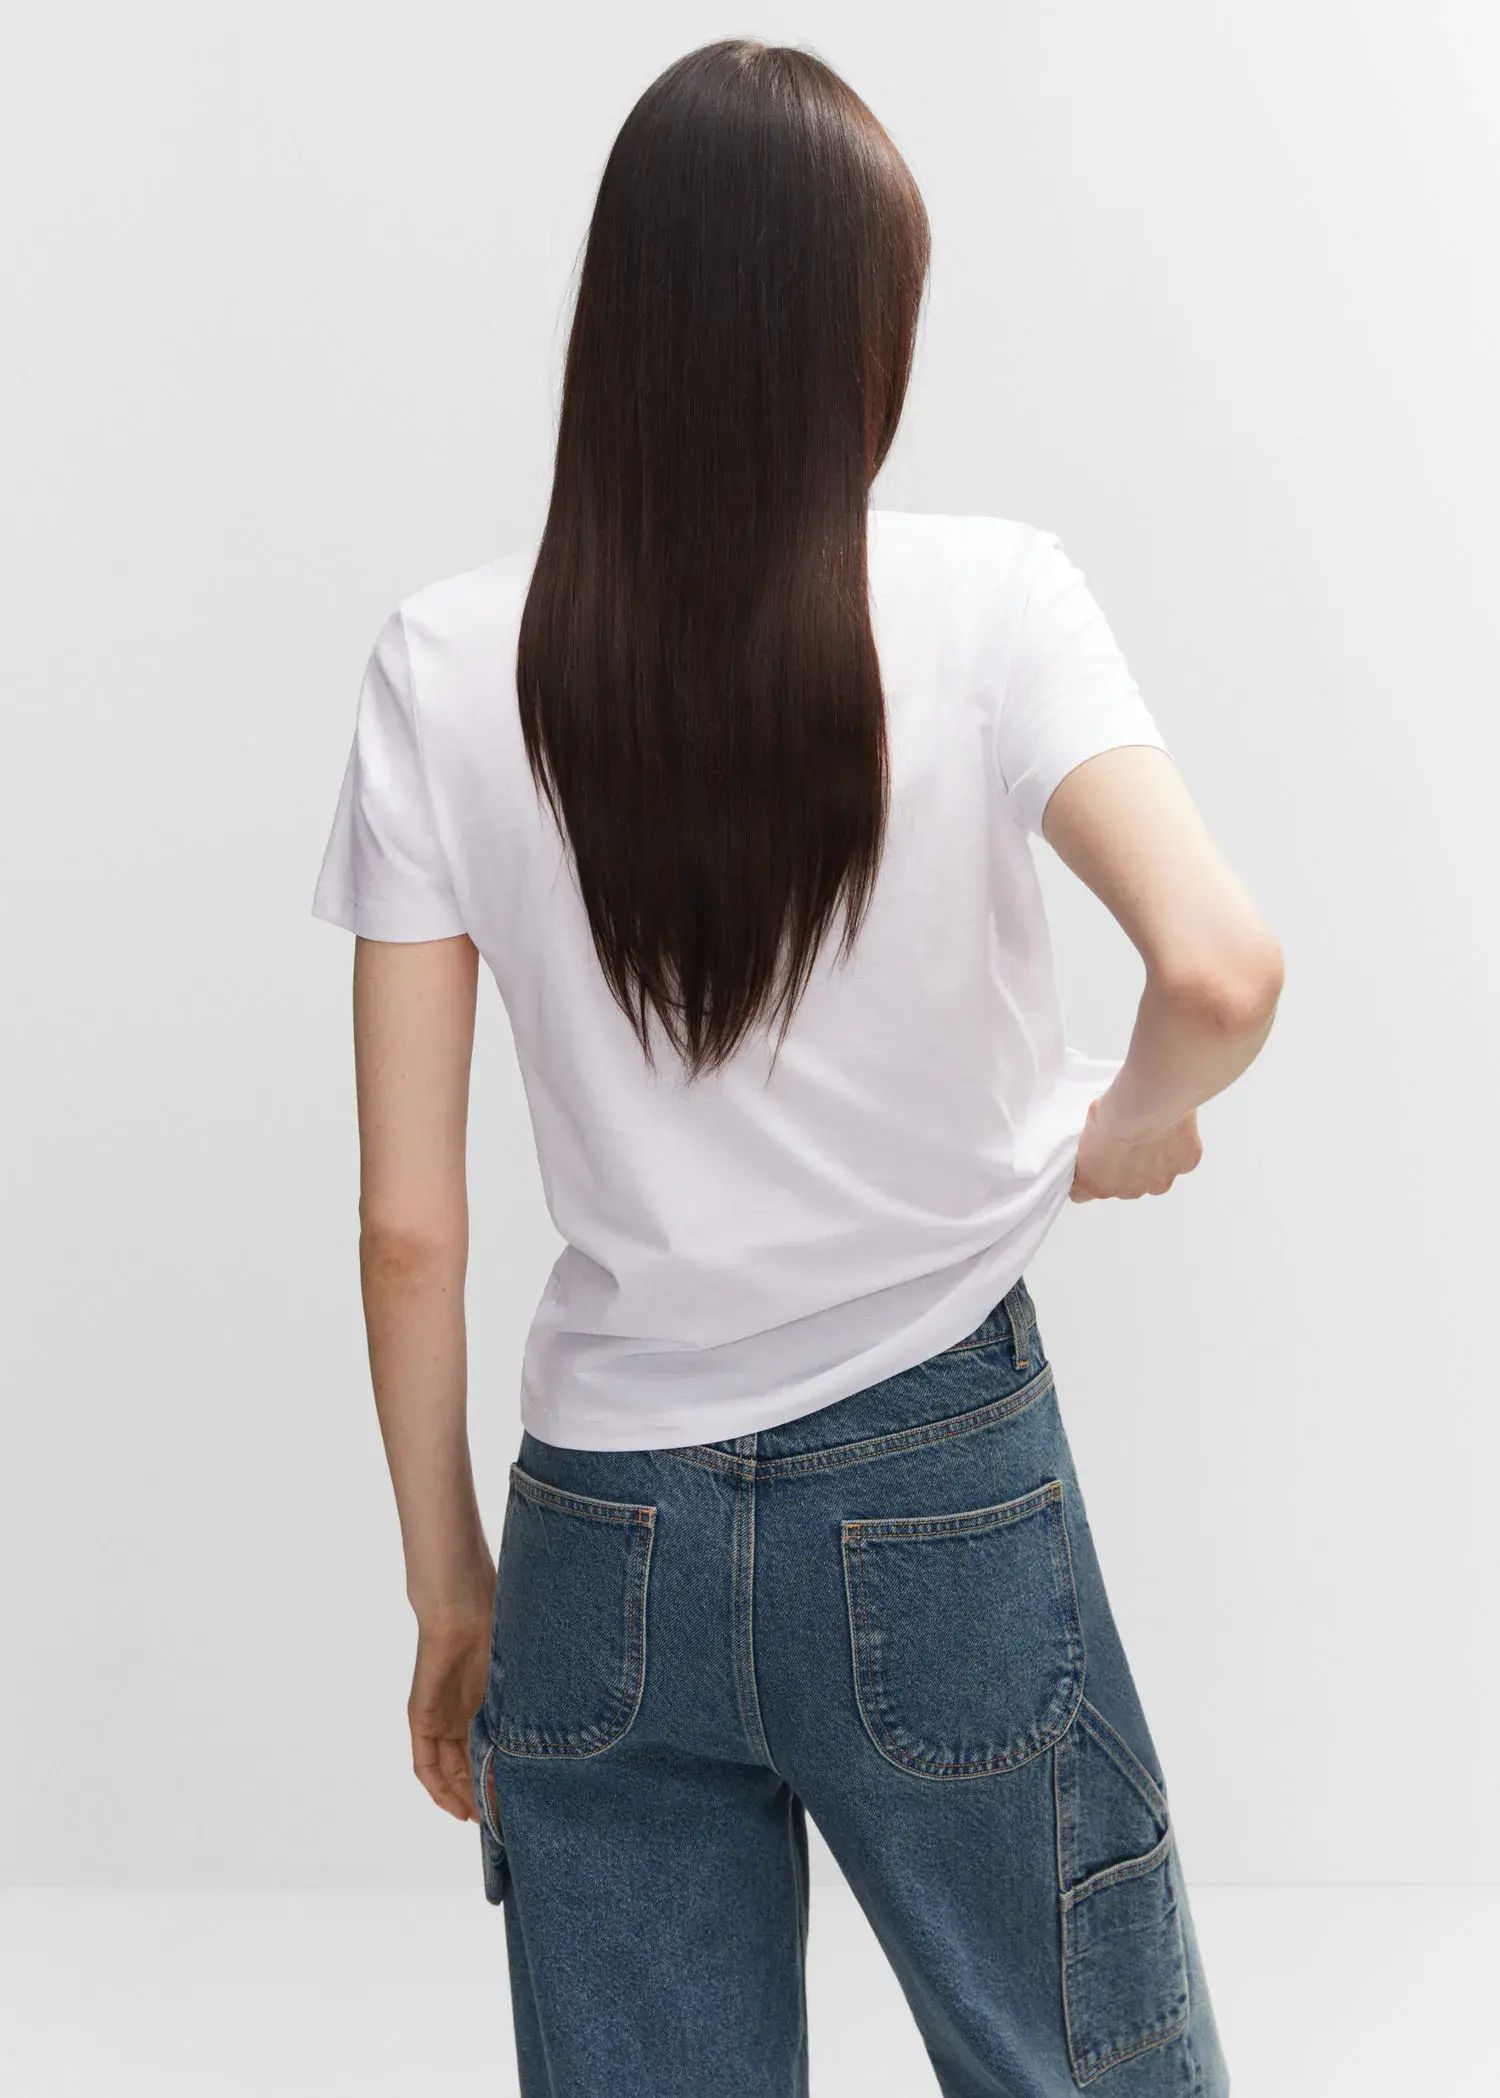 Mango 100% cotton T-shirt. a person with long hair wearing a white t-shirt. 